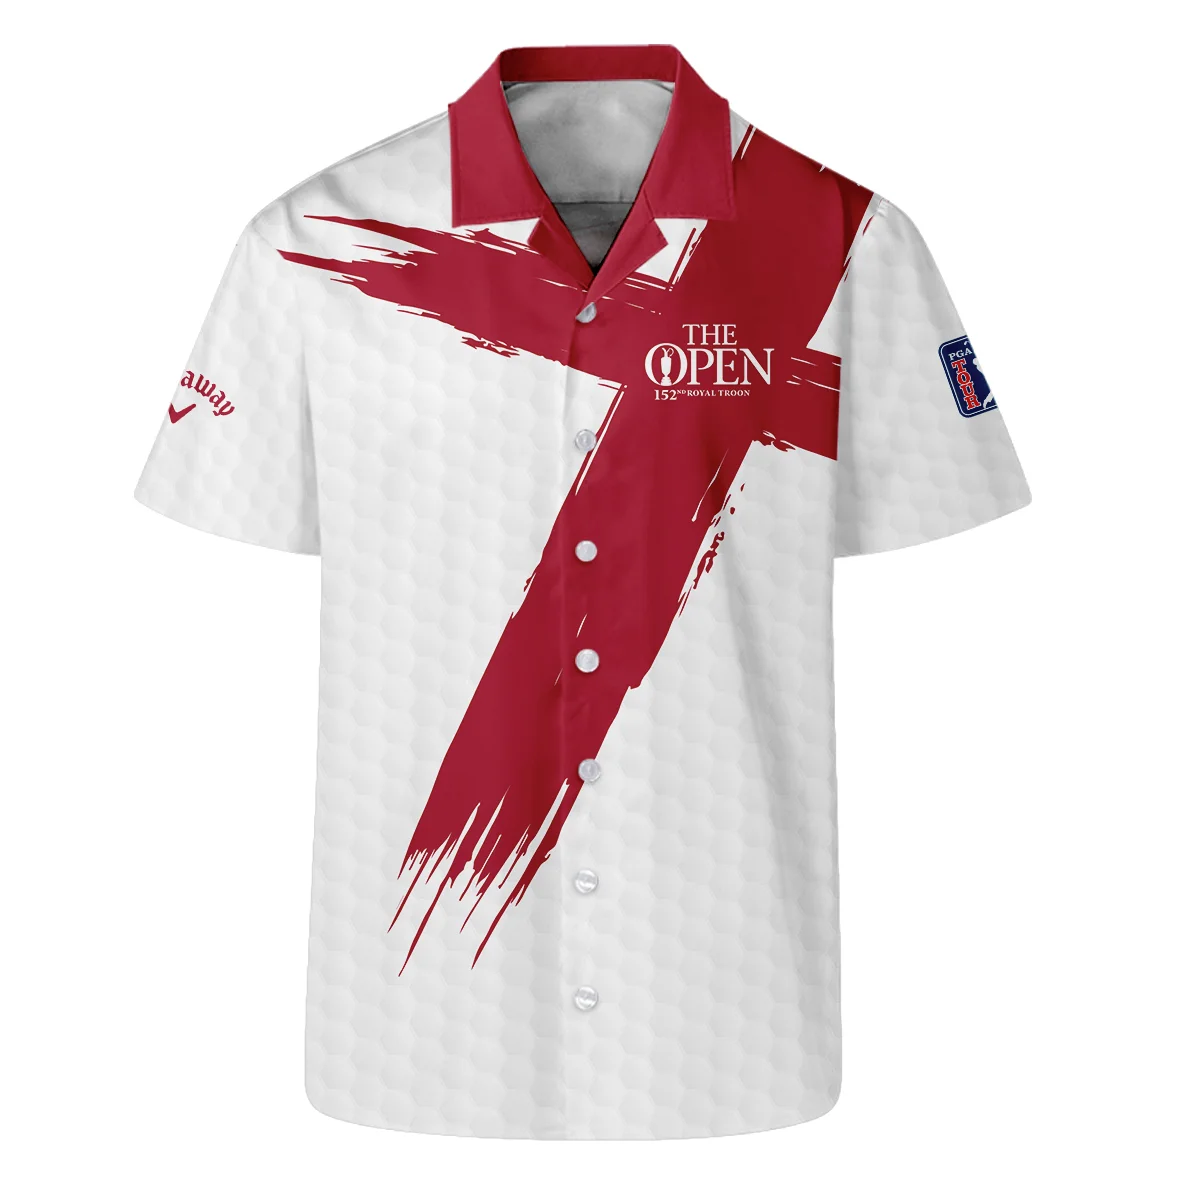 Callaway 152nd The Open Championship Golf Sport Unisex Sweatshirt Red White Golf Pattern All Over Print Sweatshirt